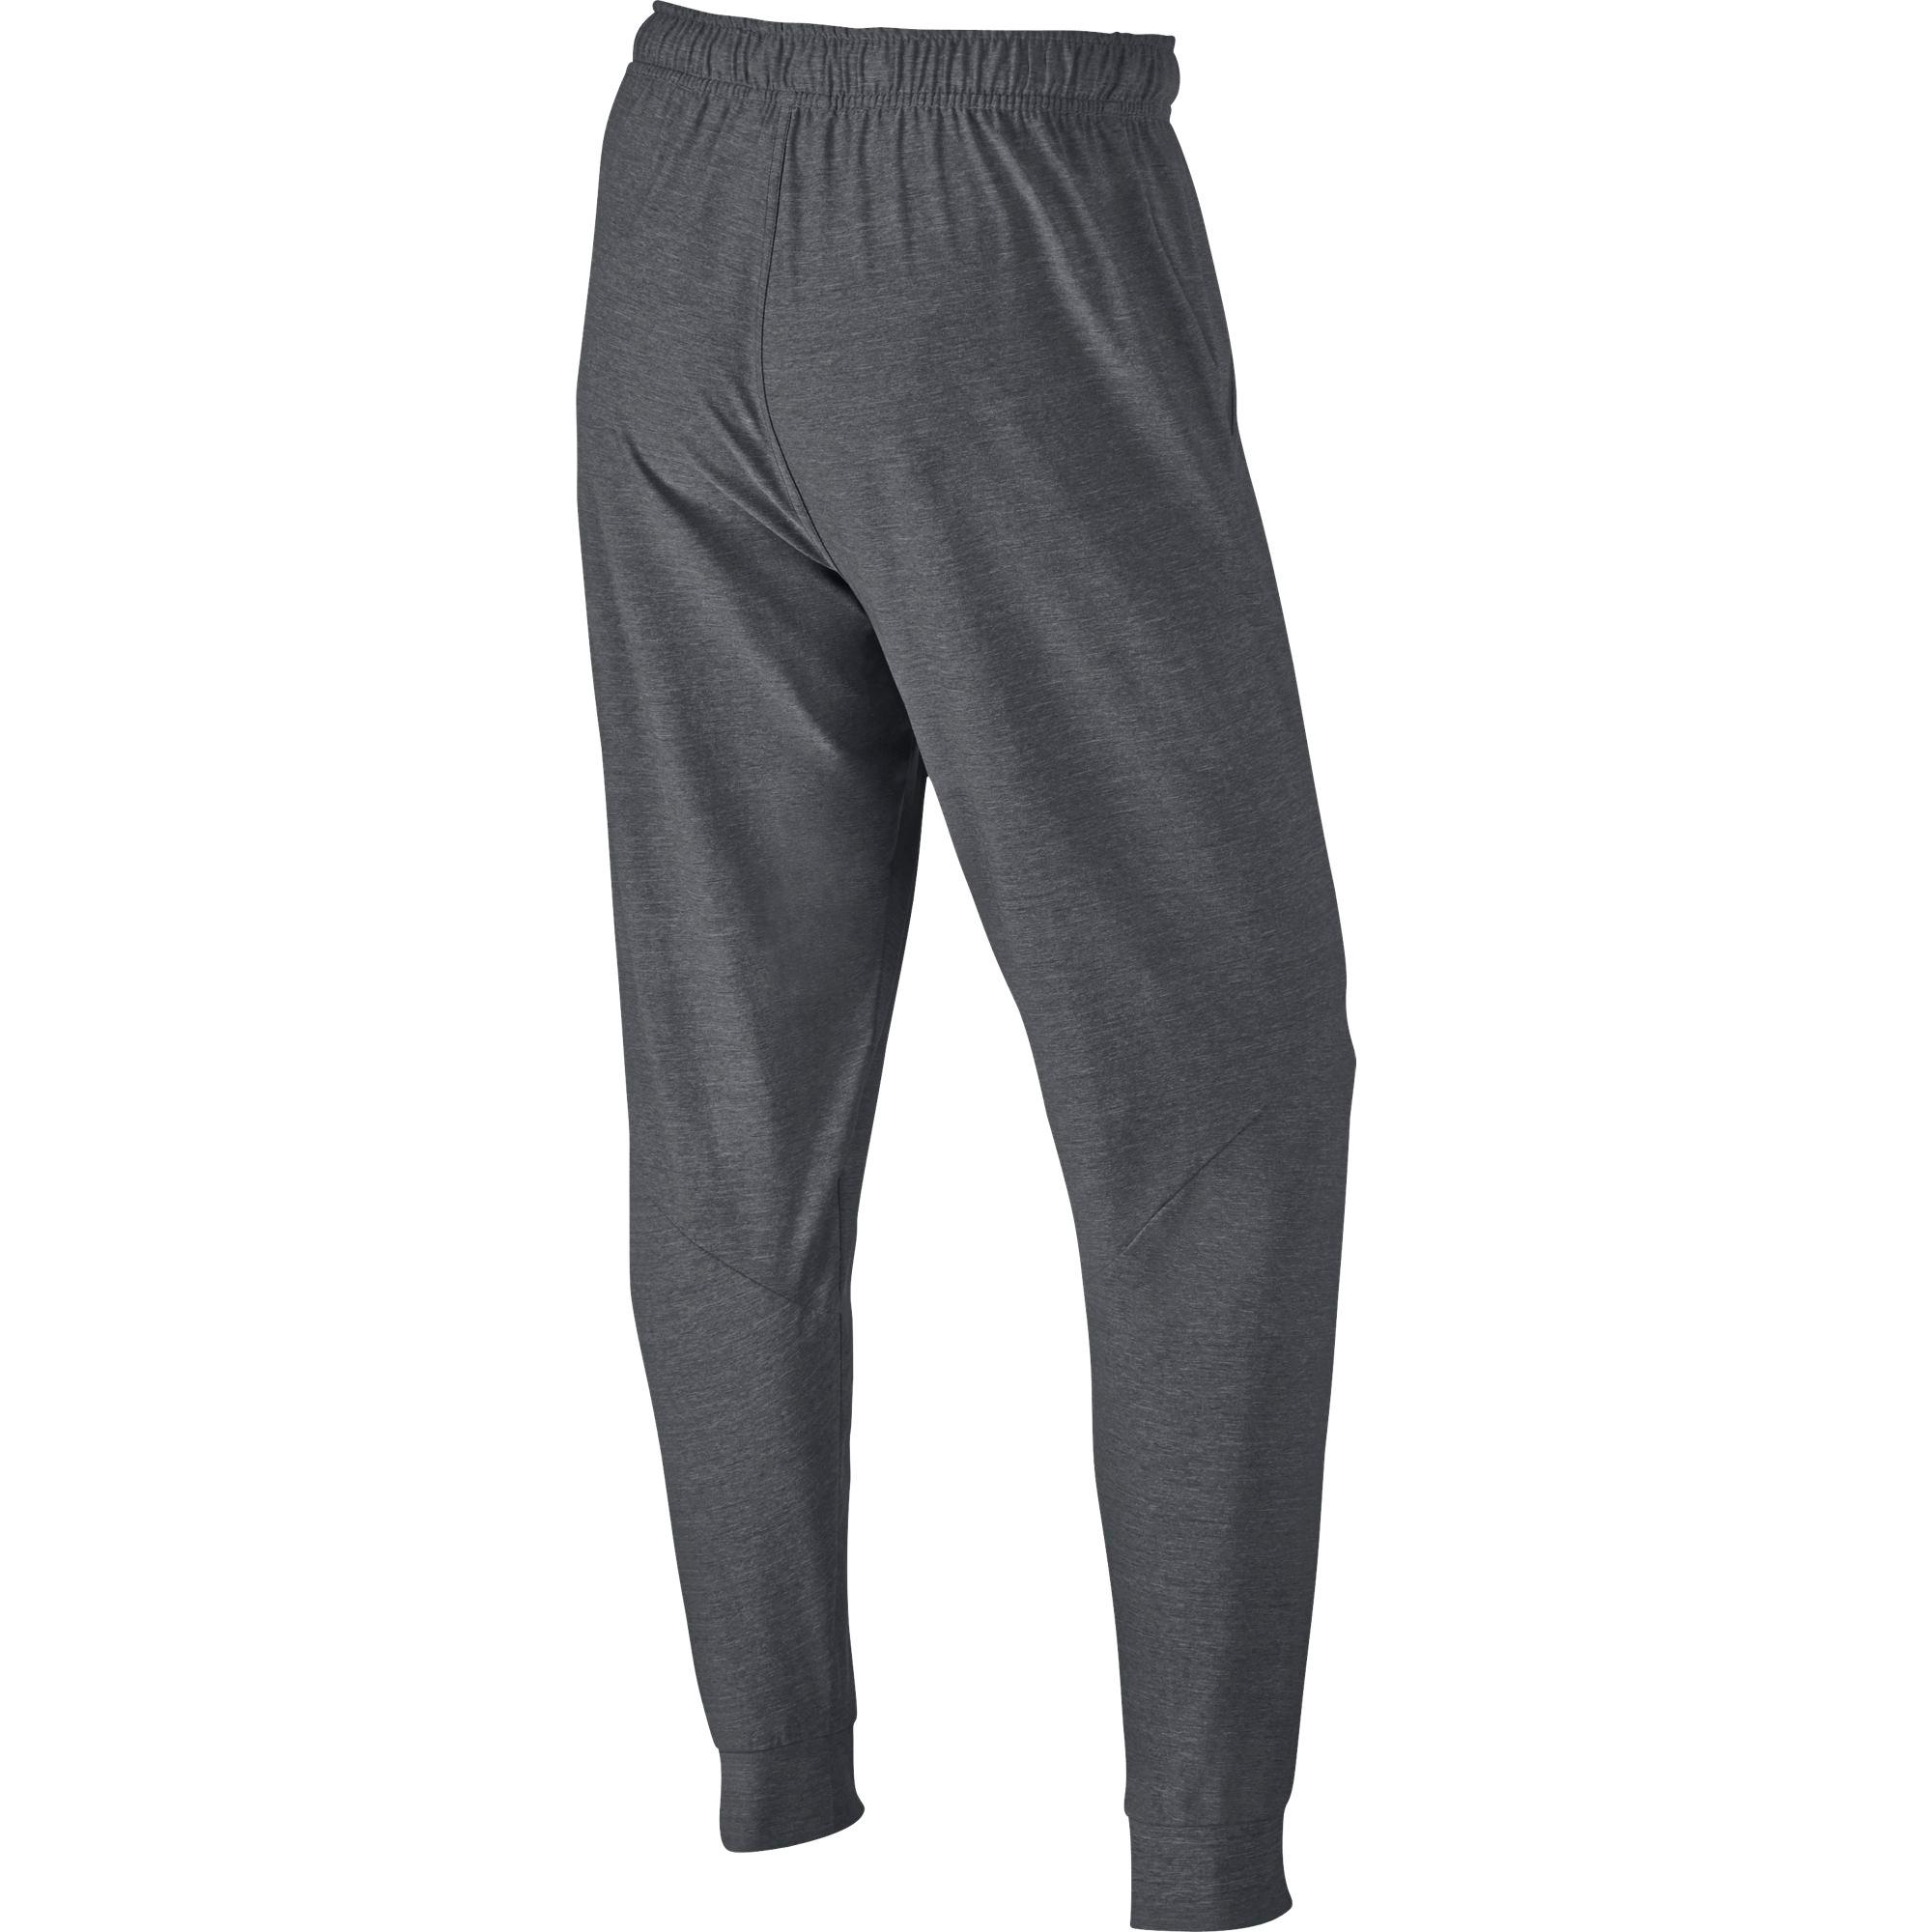 Nike Mens Tech Woven Training Pants - Dark Grey/Black - Tennisnuts.com